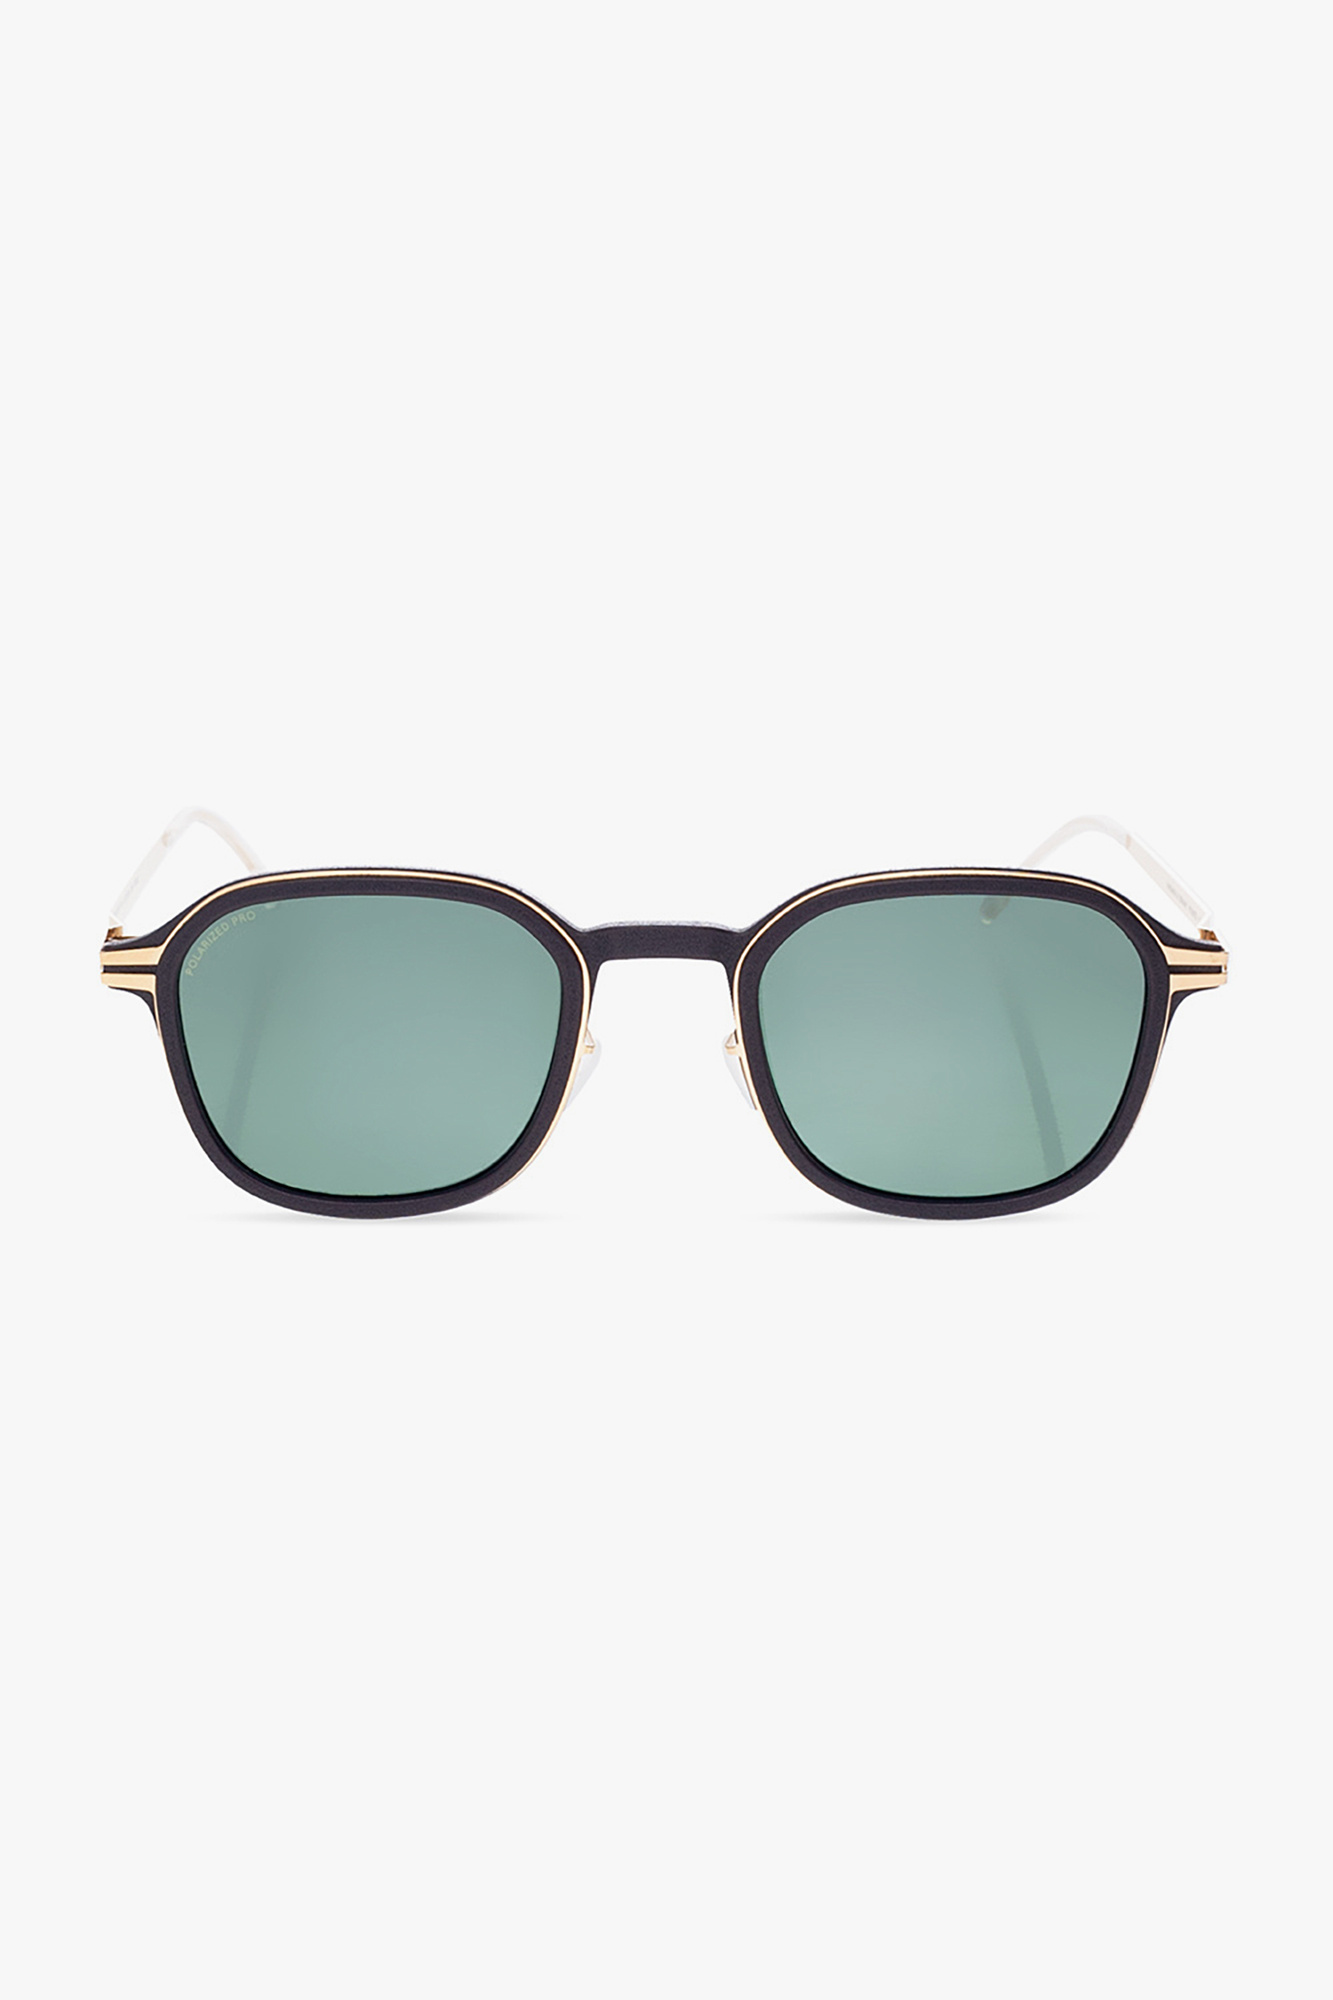 Mykita ‘Fir’ Head sunglasses